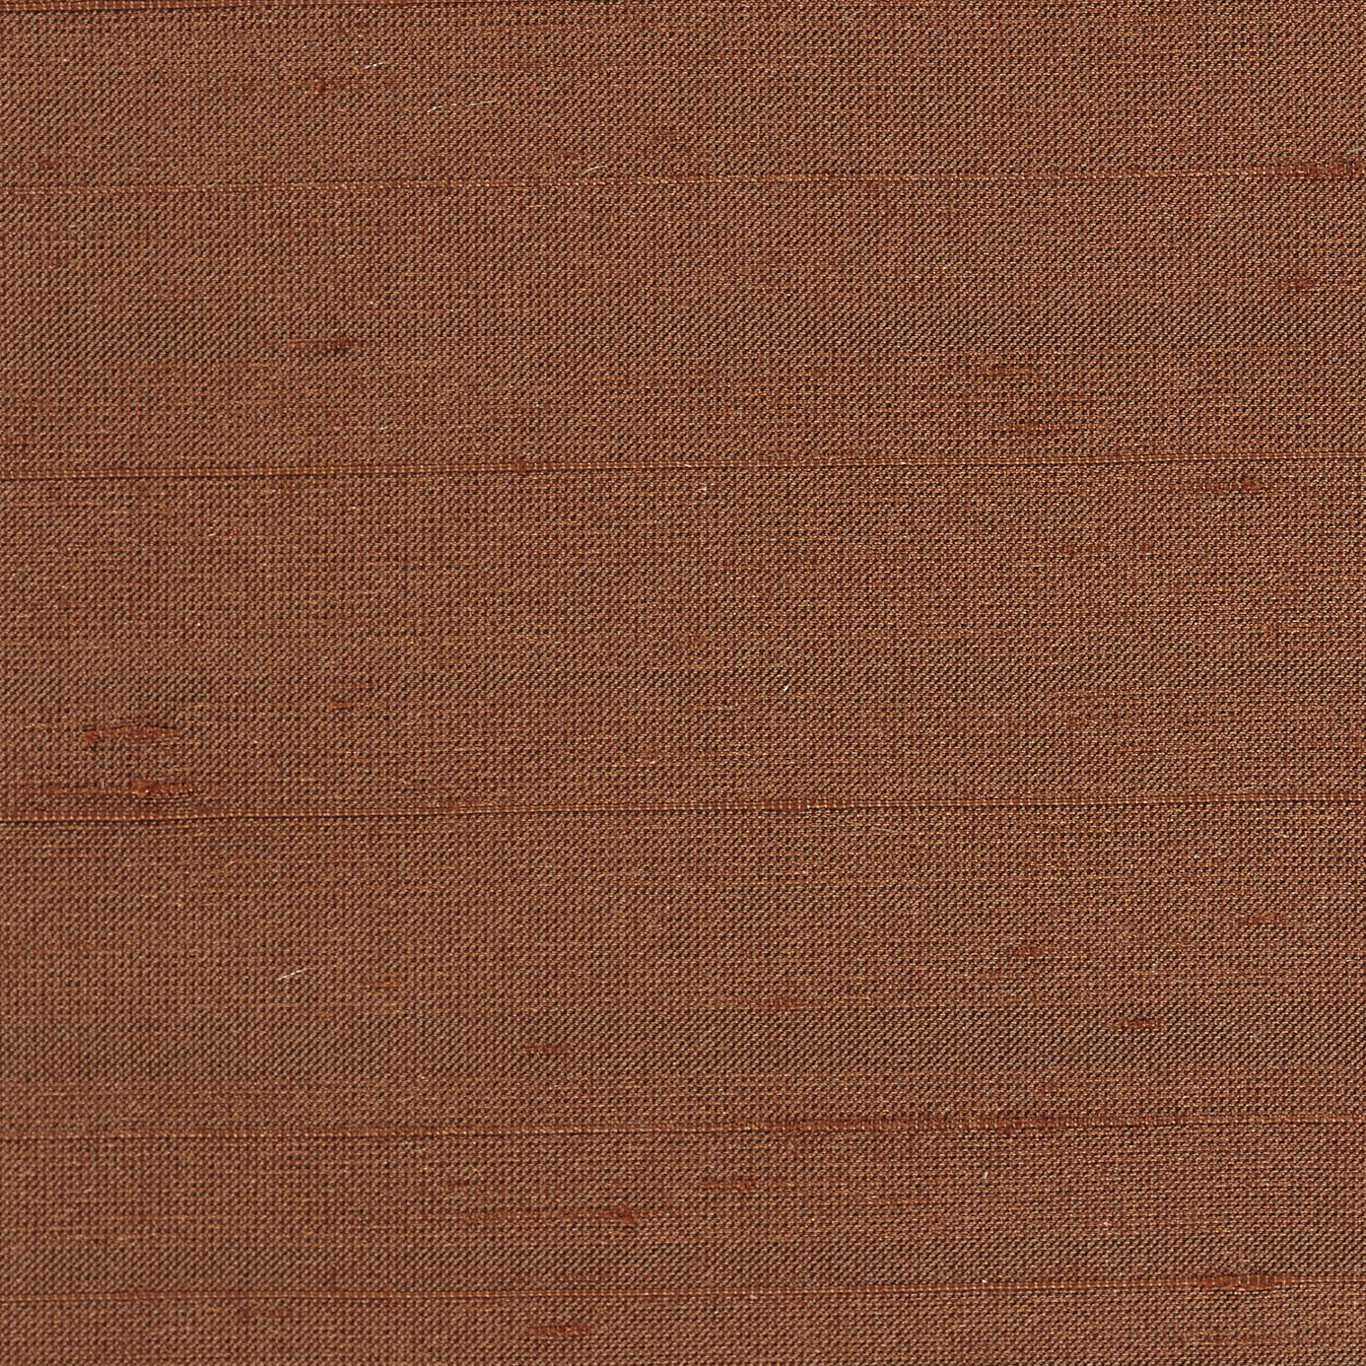 Deflect Fabric by Harlequin - HPOL440474 - Nutmeg